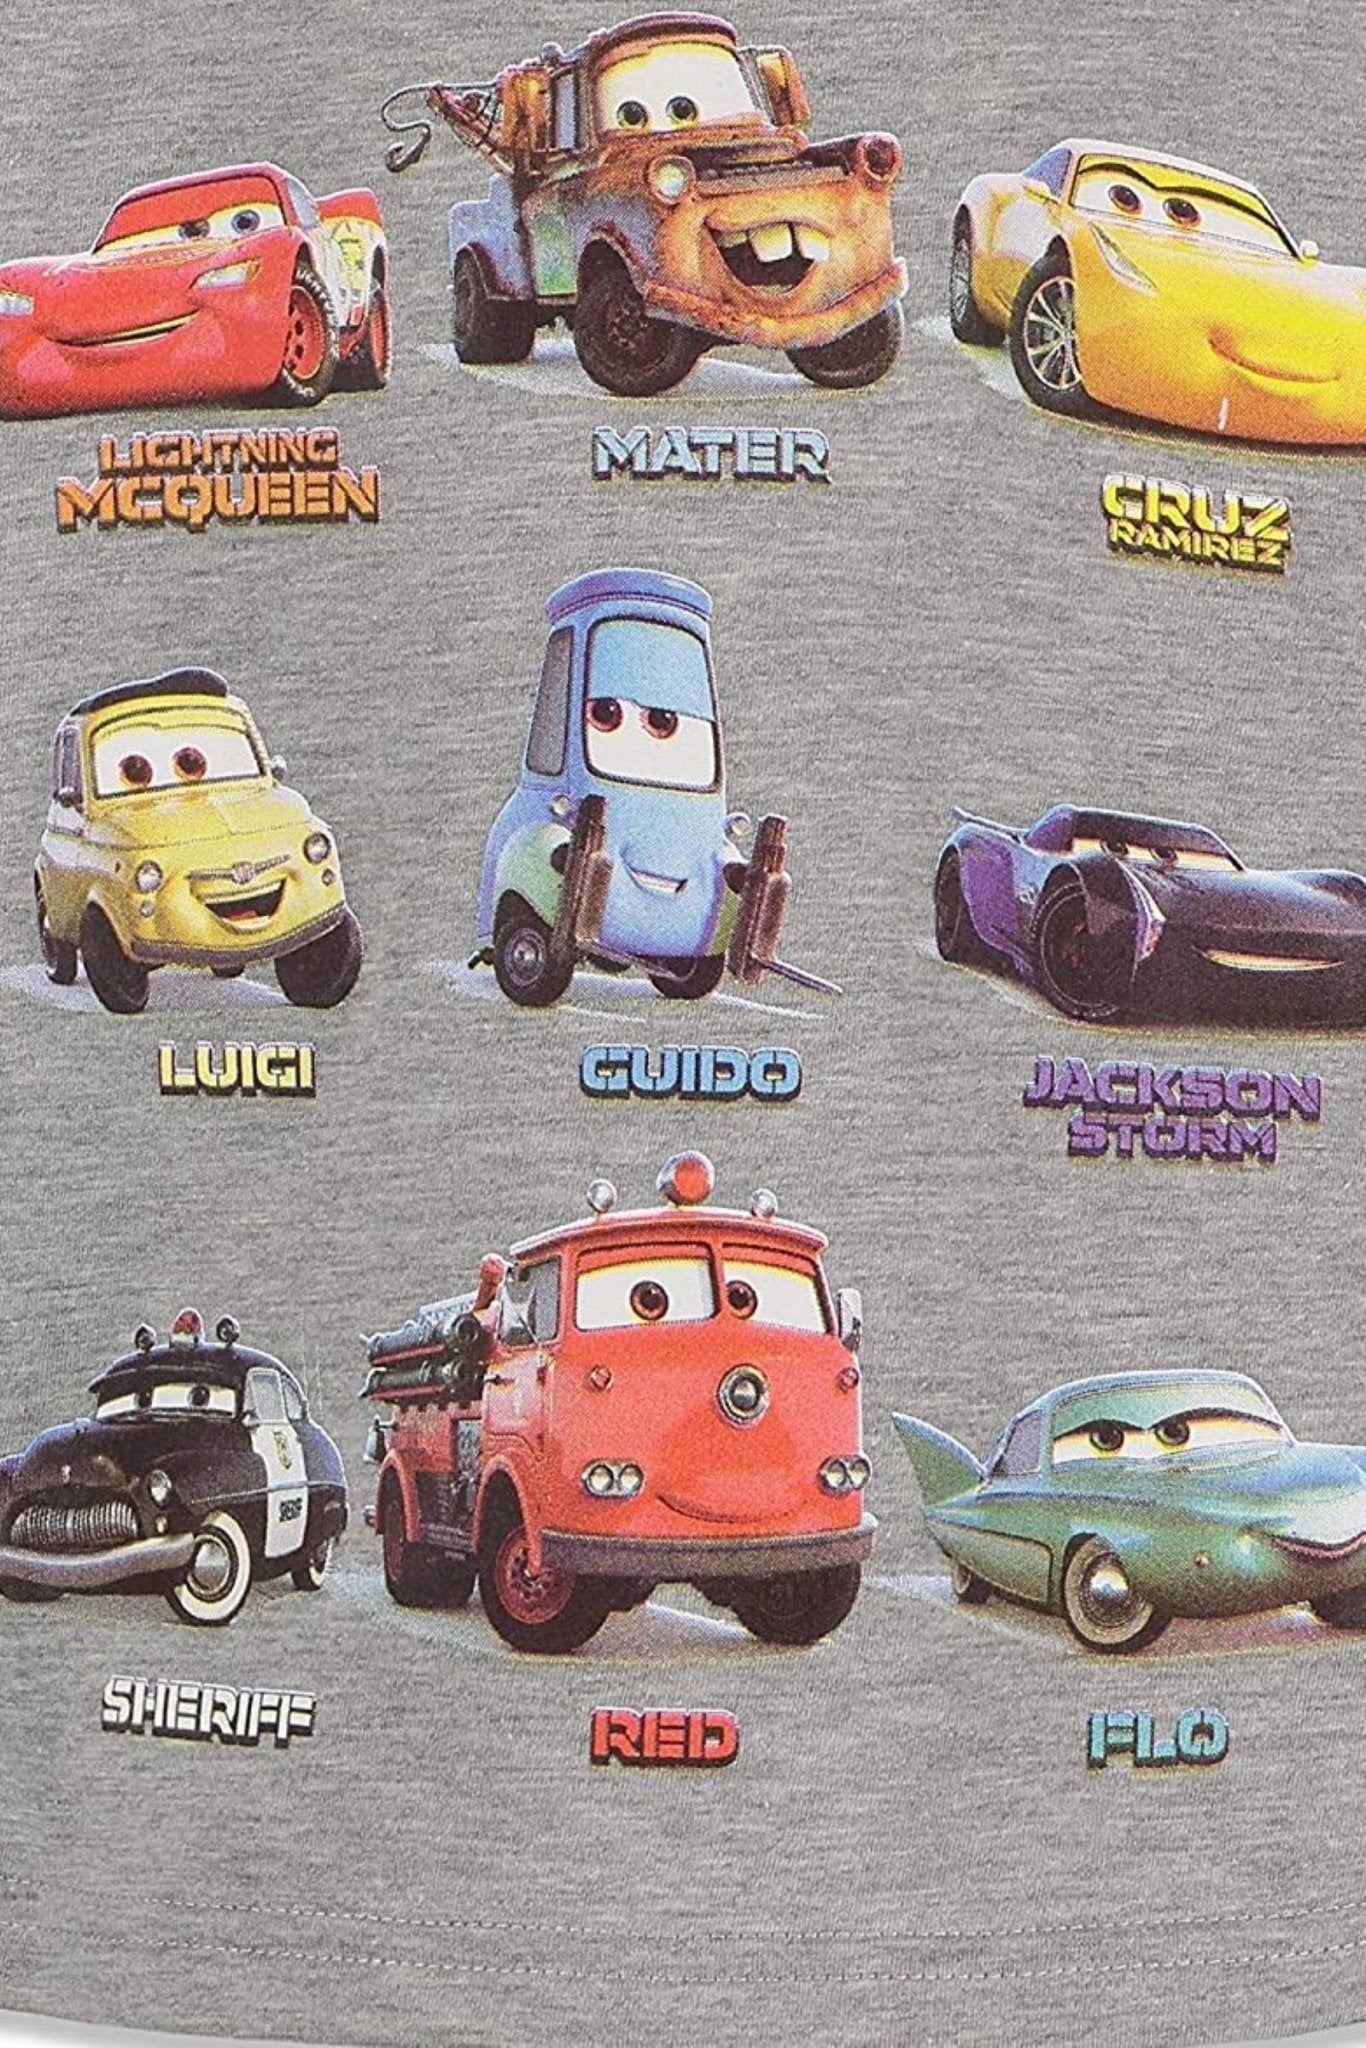 Disney Cars Lightning McQueen 3 Pack Graphic Short Sleeve T-Shirt - imagikids